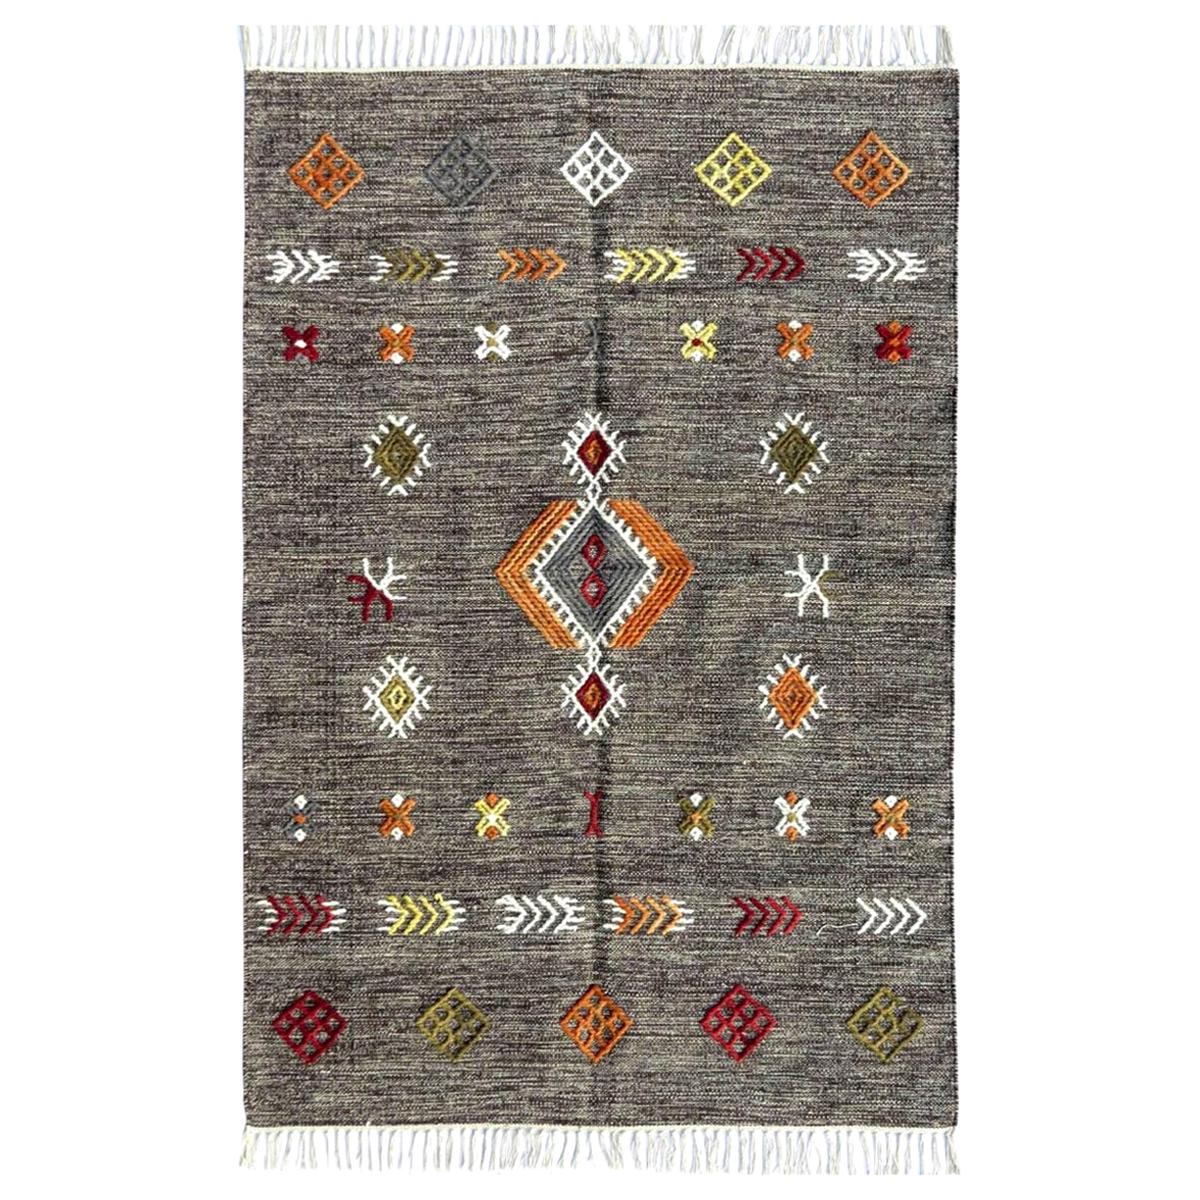 Beautiful New Tribal Moroccan Design Handwoven Kilim Rug For Sale